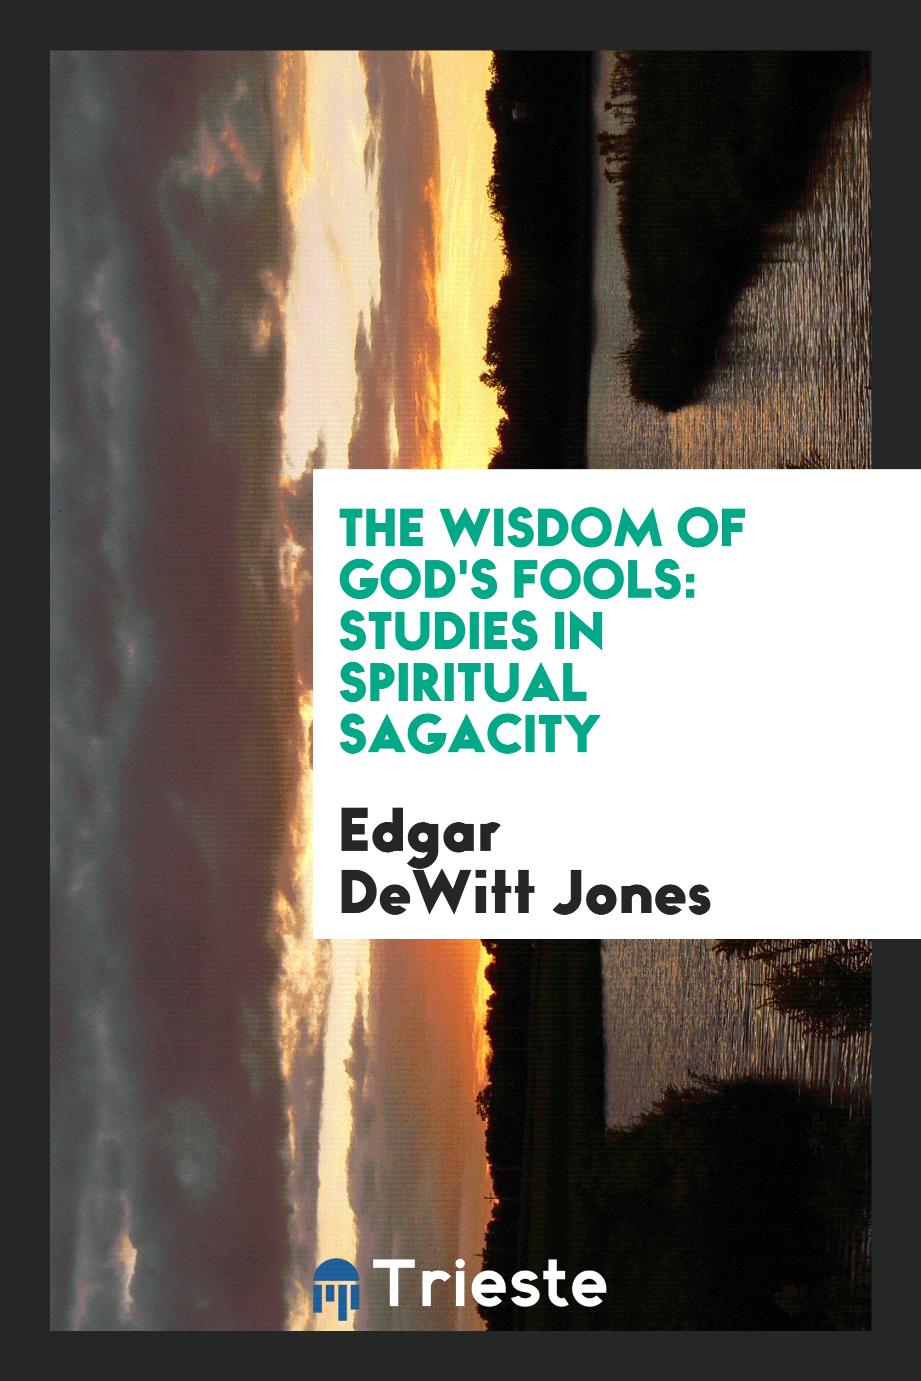 The wisdom of God's fools: studies in spiritual sagacity